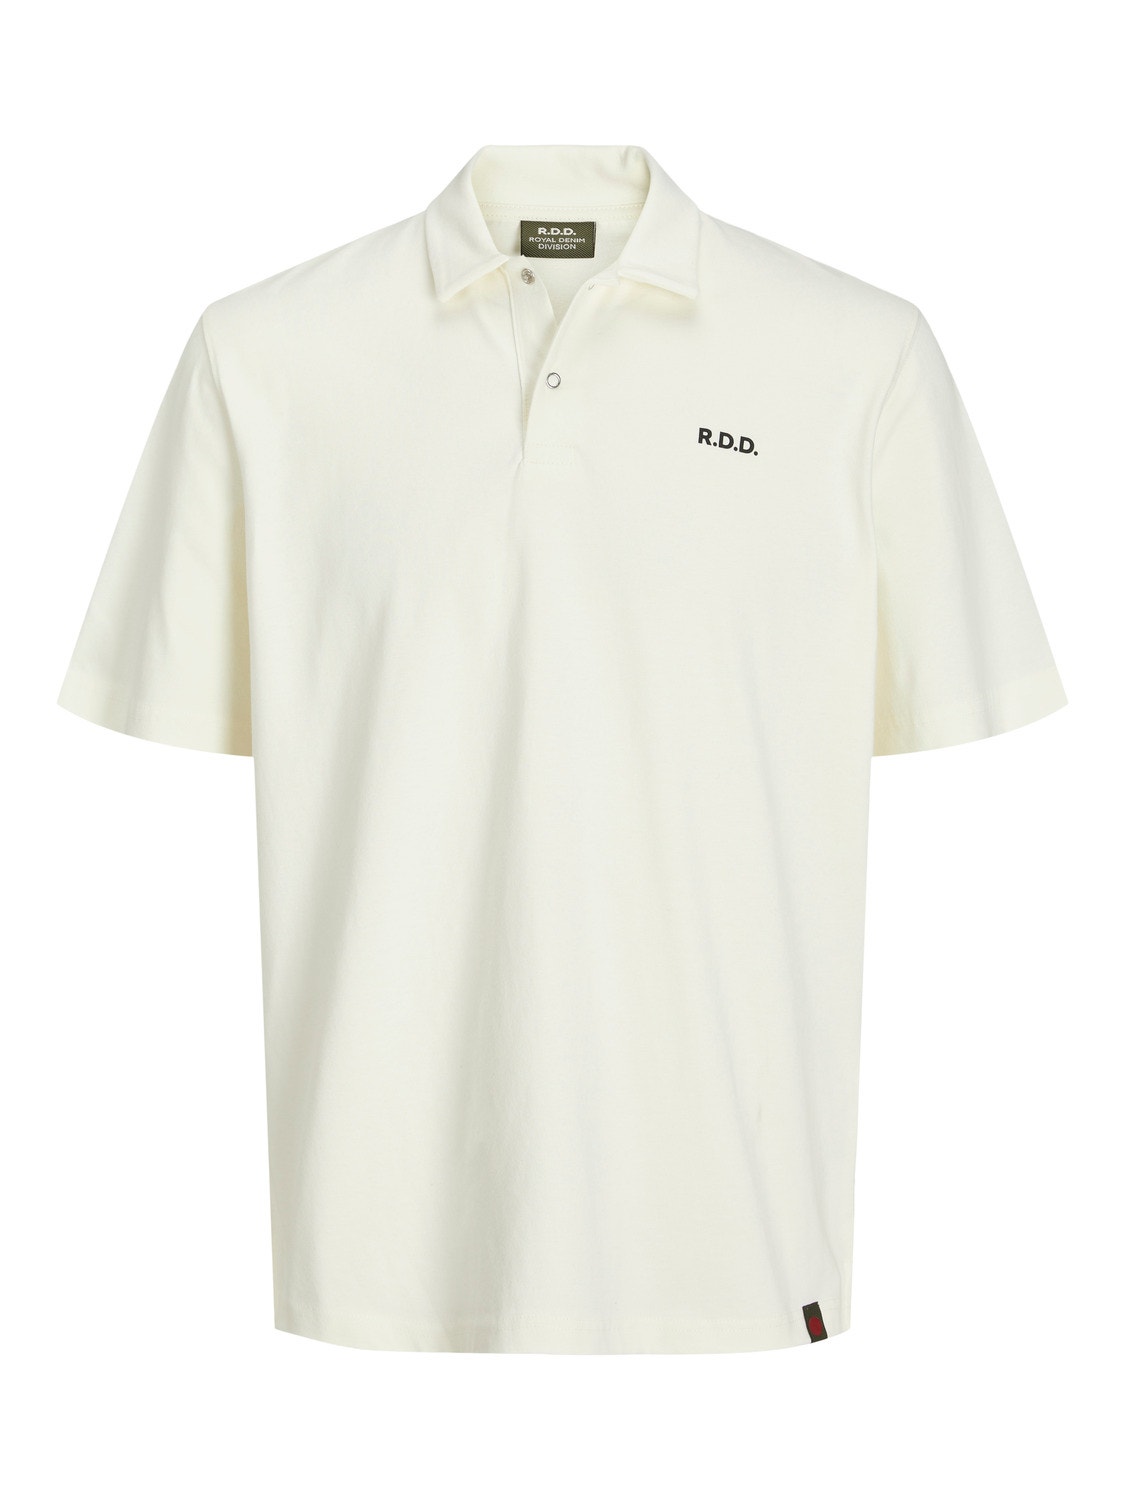 Jack & Jones RDD Logo Polo T-shirt -Egret - 12232814